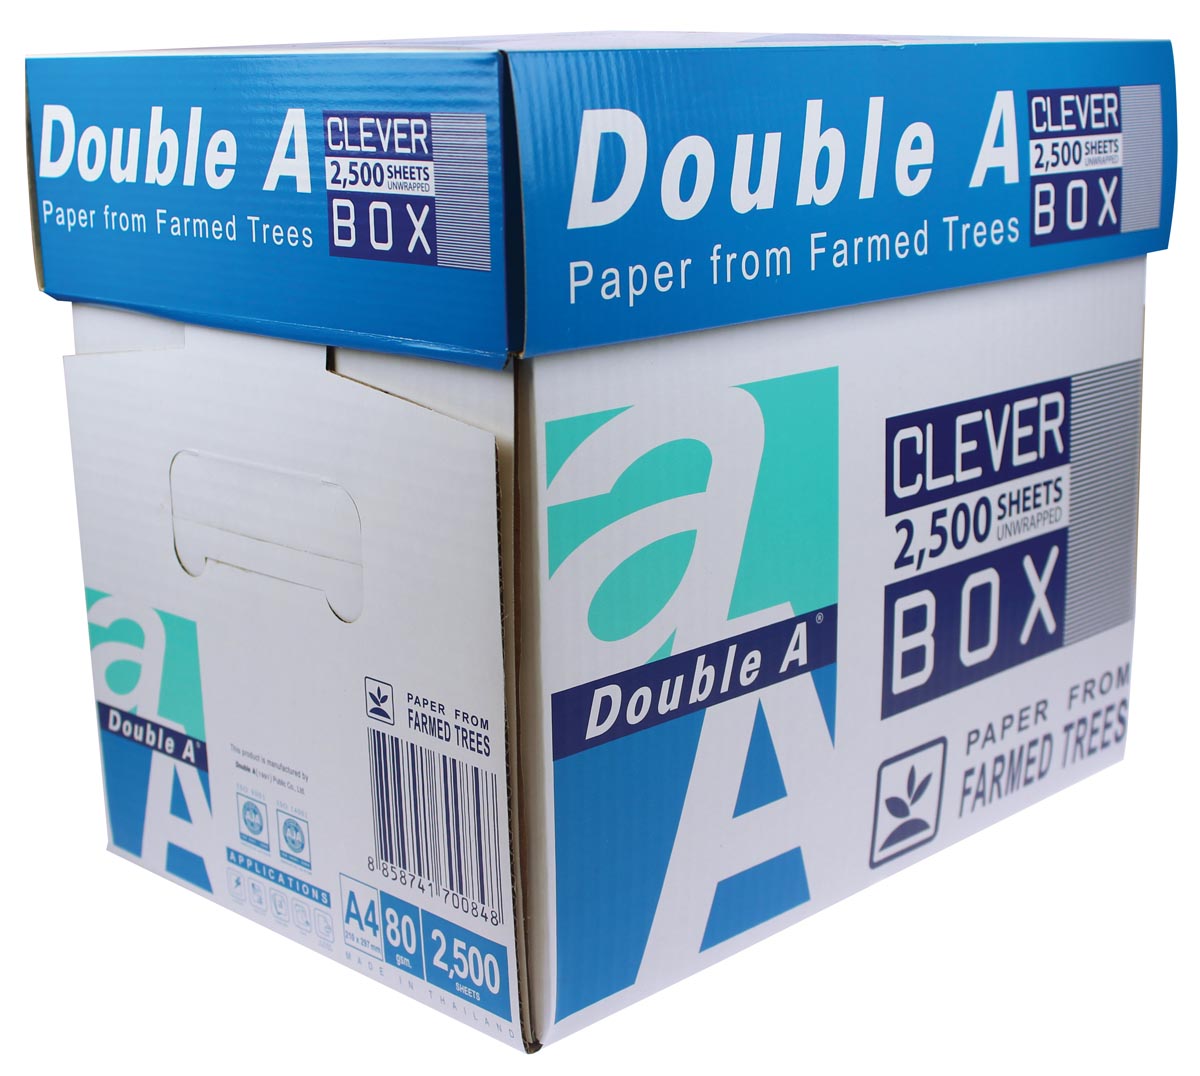 Toegeven de begeleiding Elementair Double A Premium printpapier ft A4, 80 g, doos van 2500 vel | Portaal Check